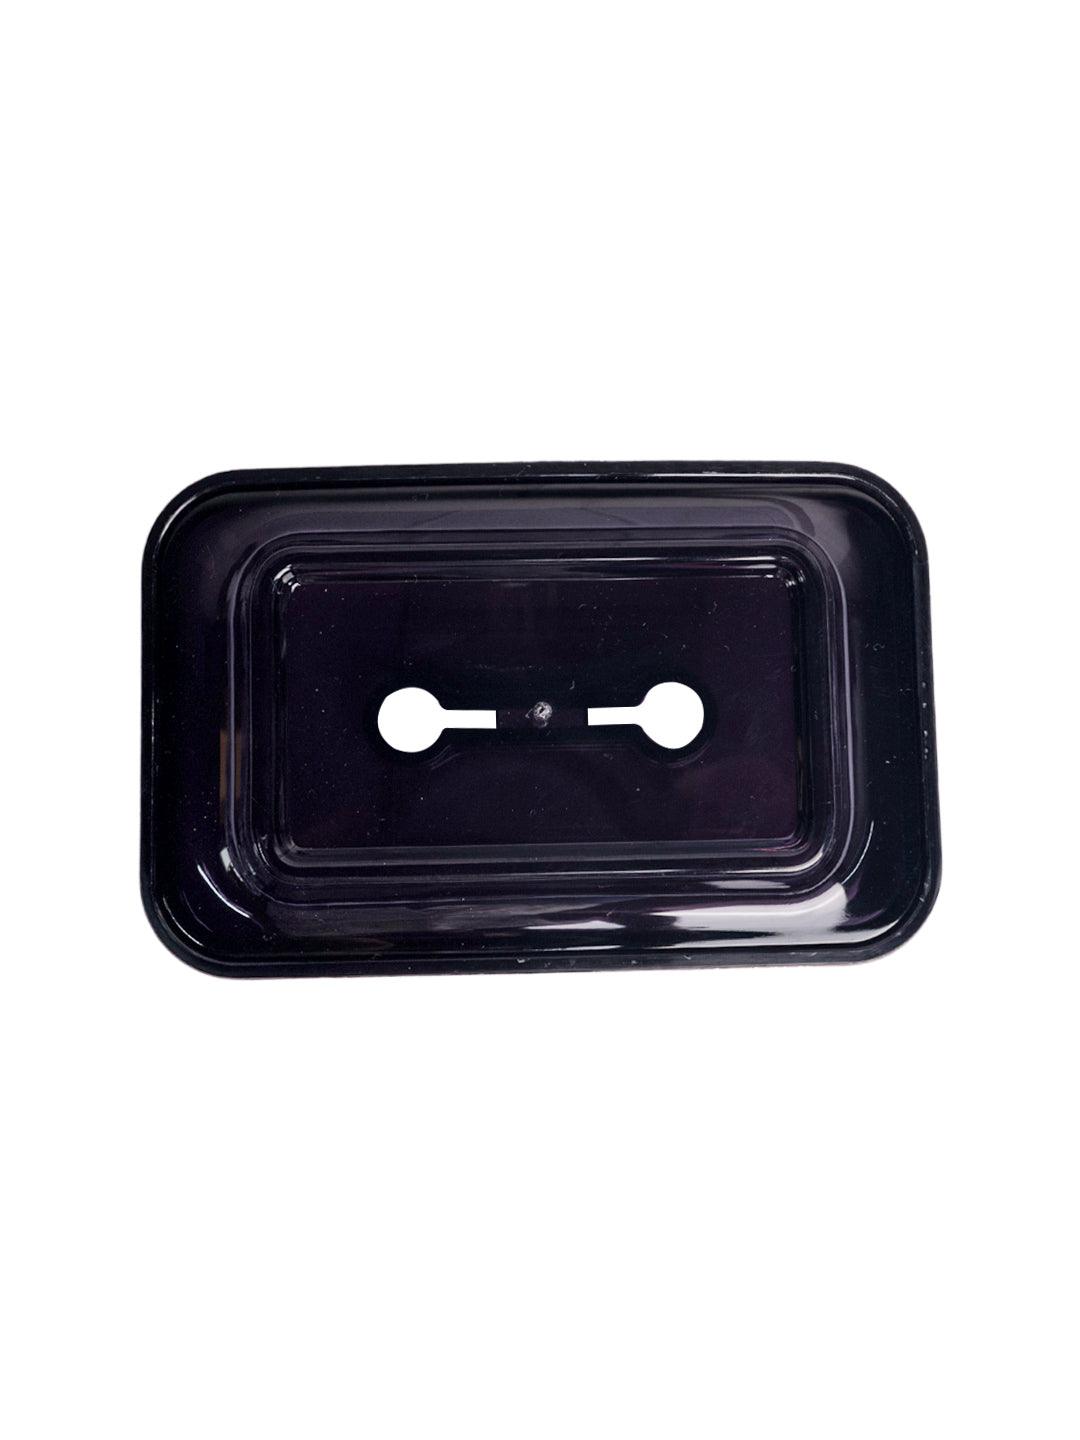 Stylish Soap Dish - Silver & Black - MARKET 99